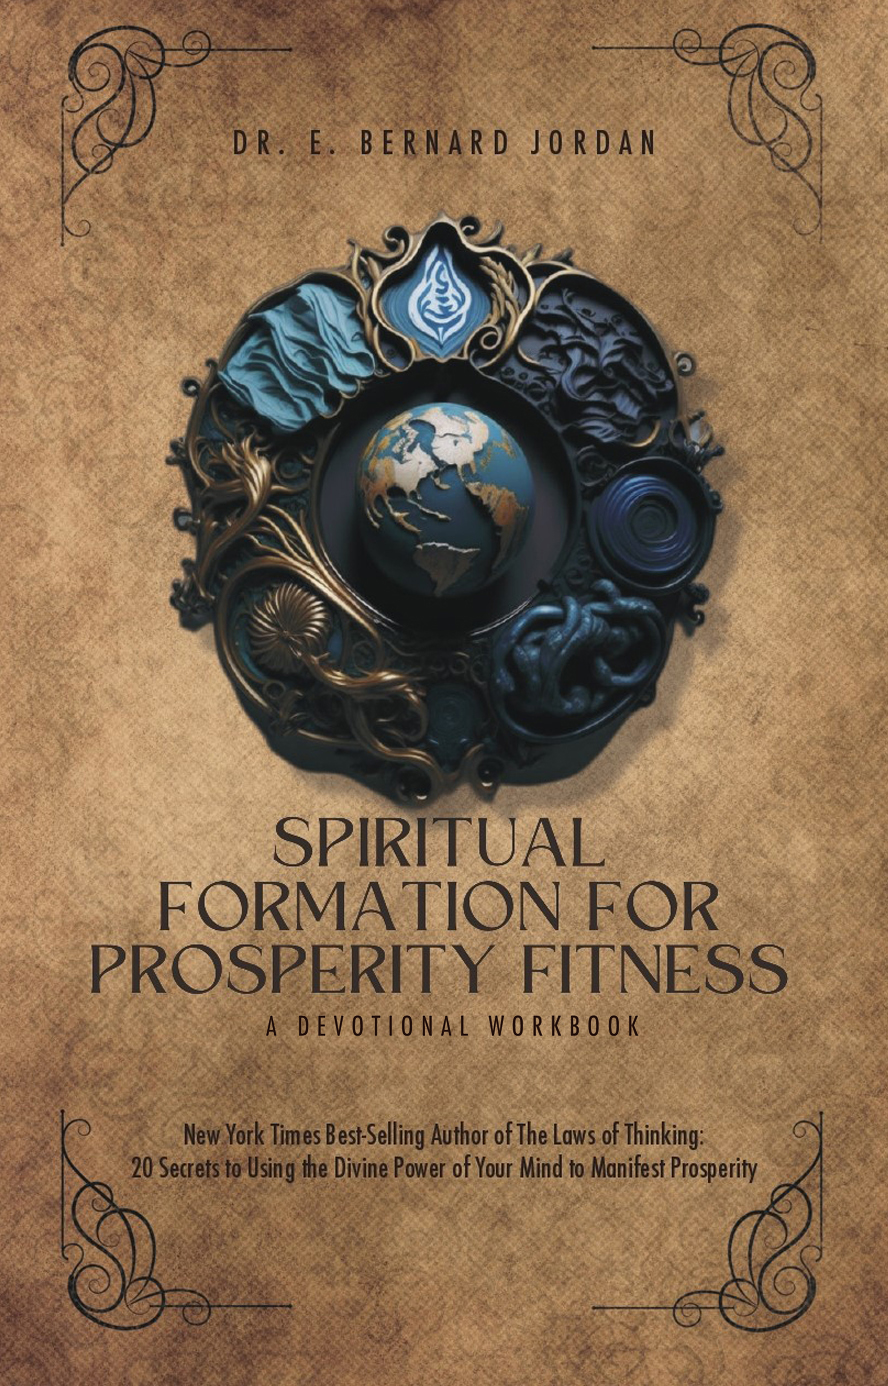 SPIRITUAL FORMATION FOR PROSPERITY FITNESS WORKBOOK